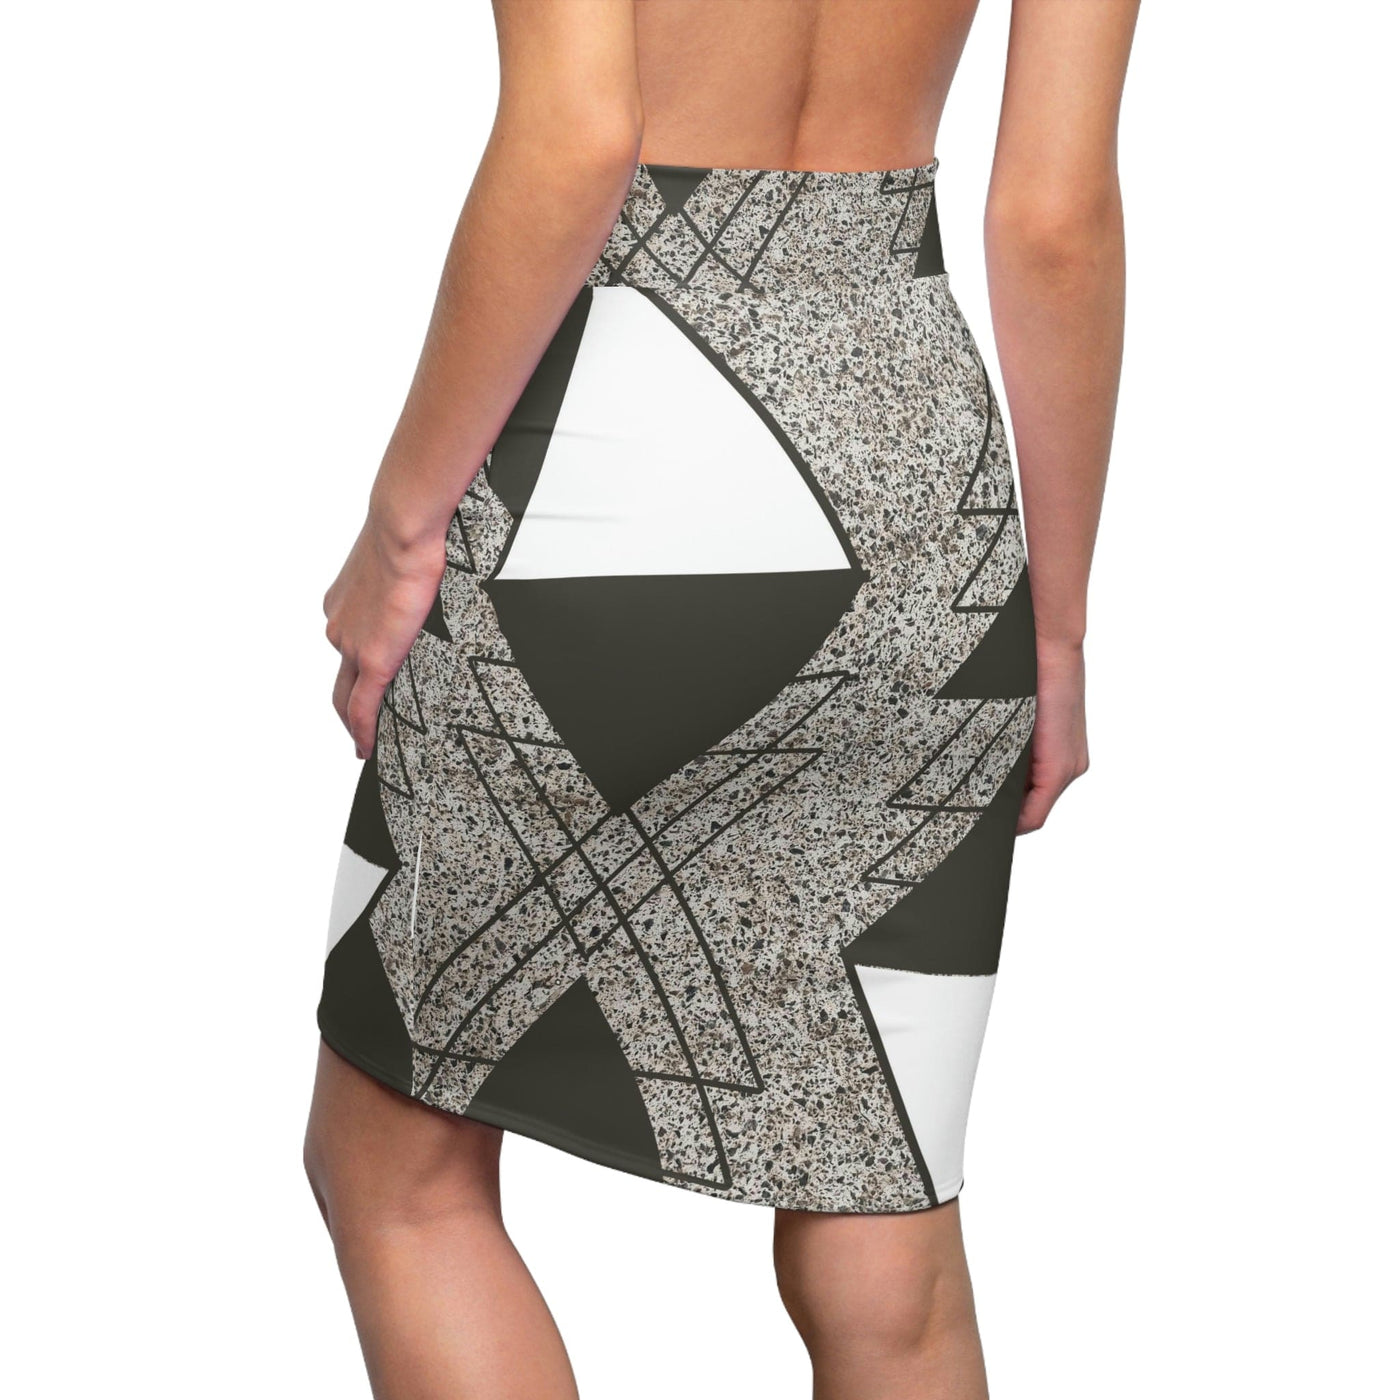 High Waist Womens Pencil Skirt - Contour Stretch Brown And White Triangular